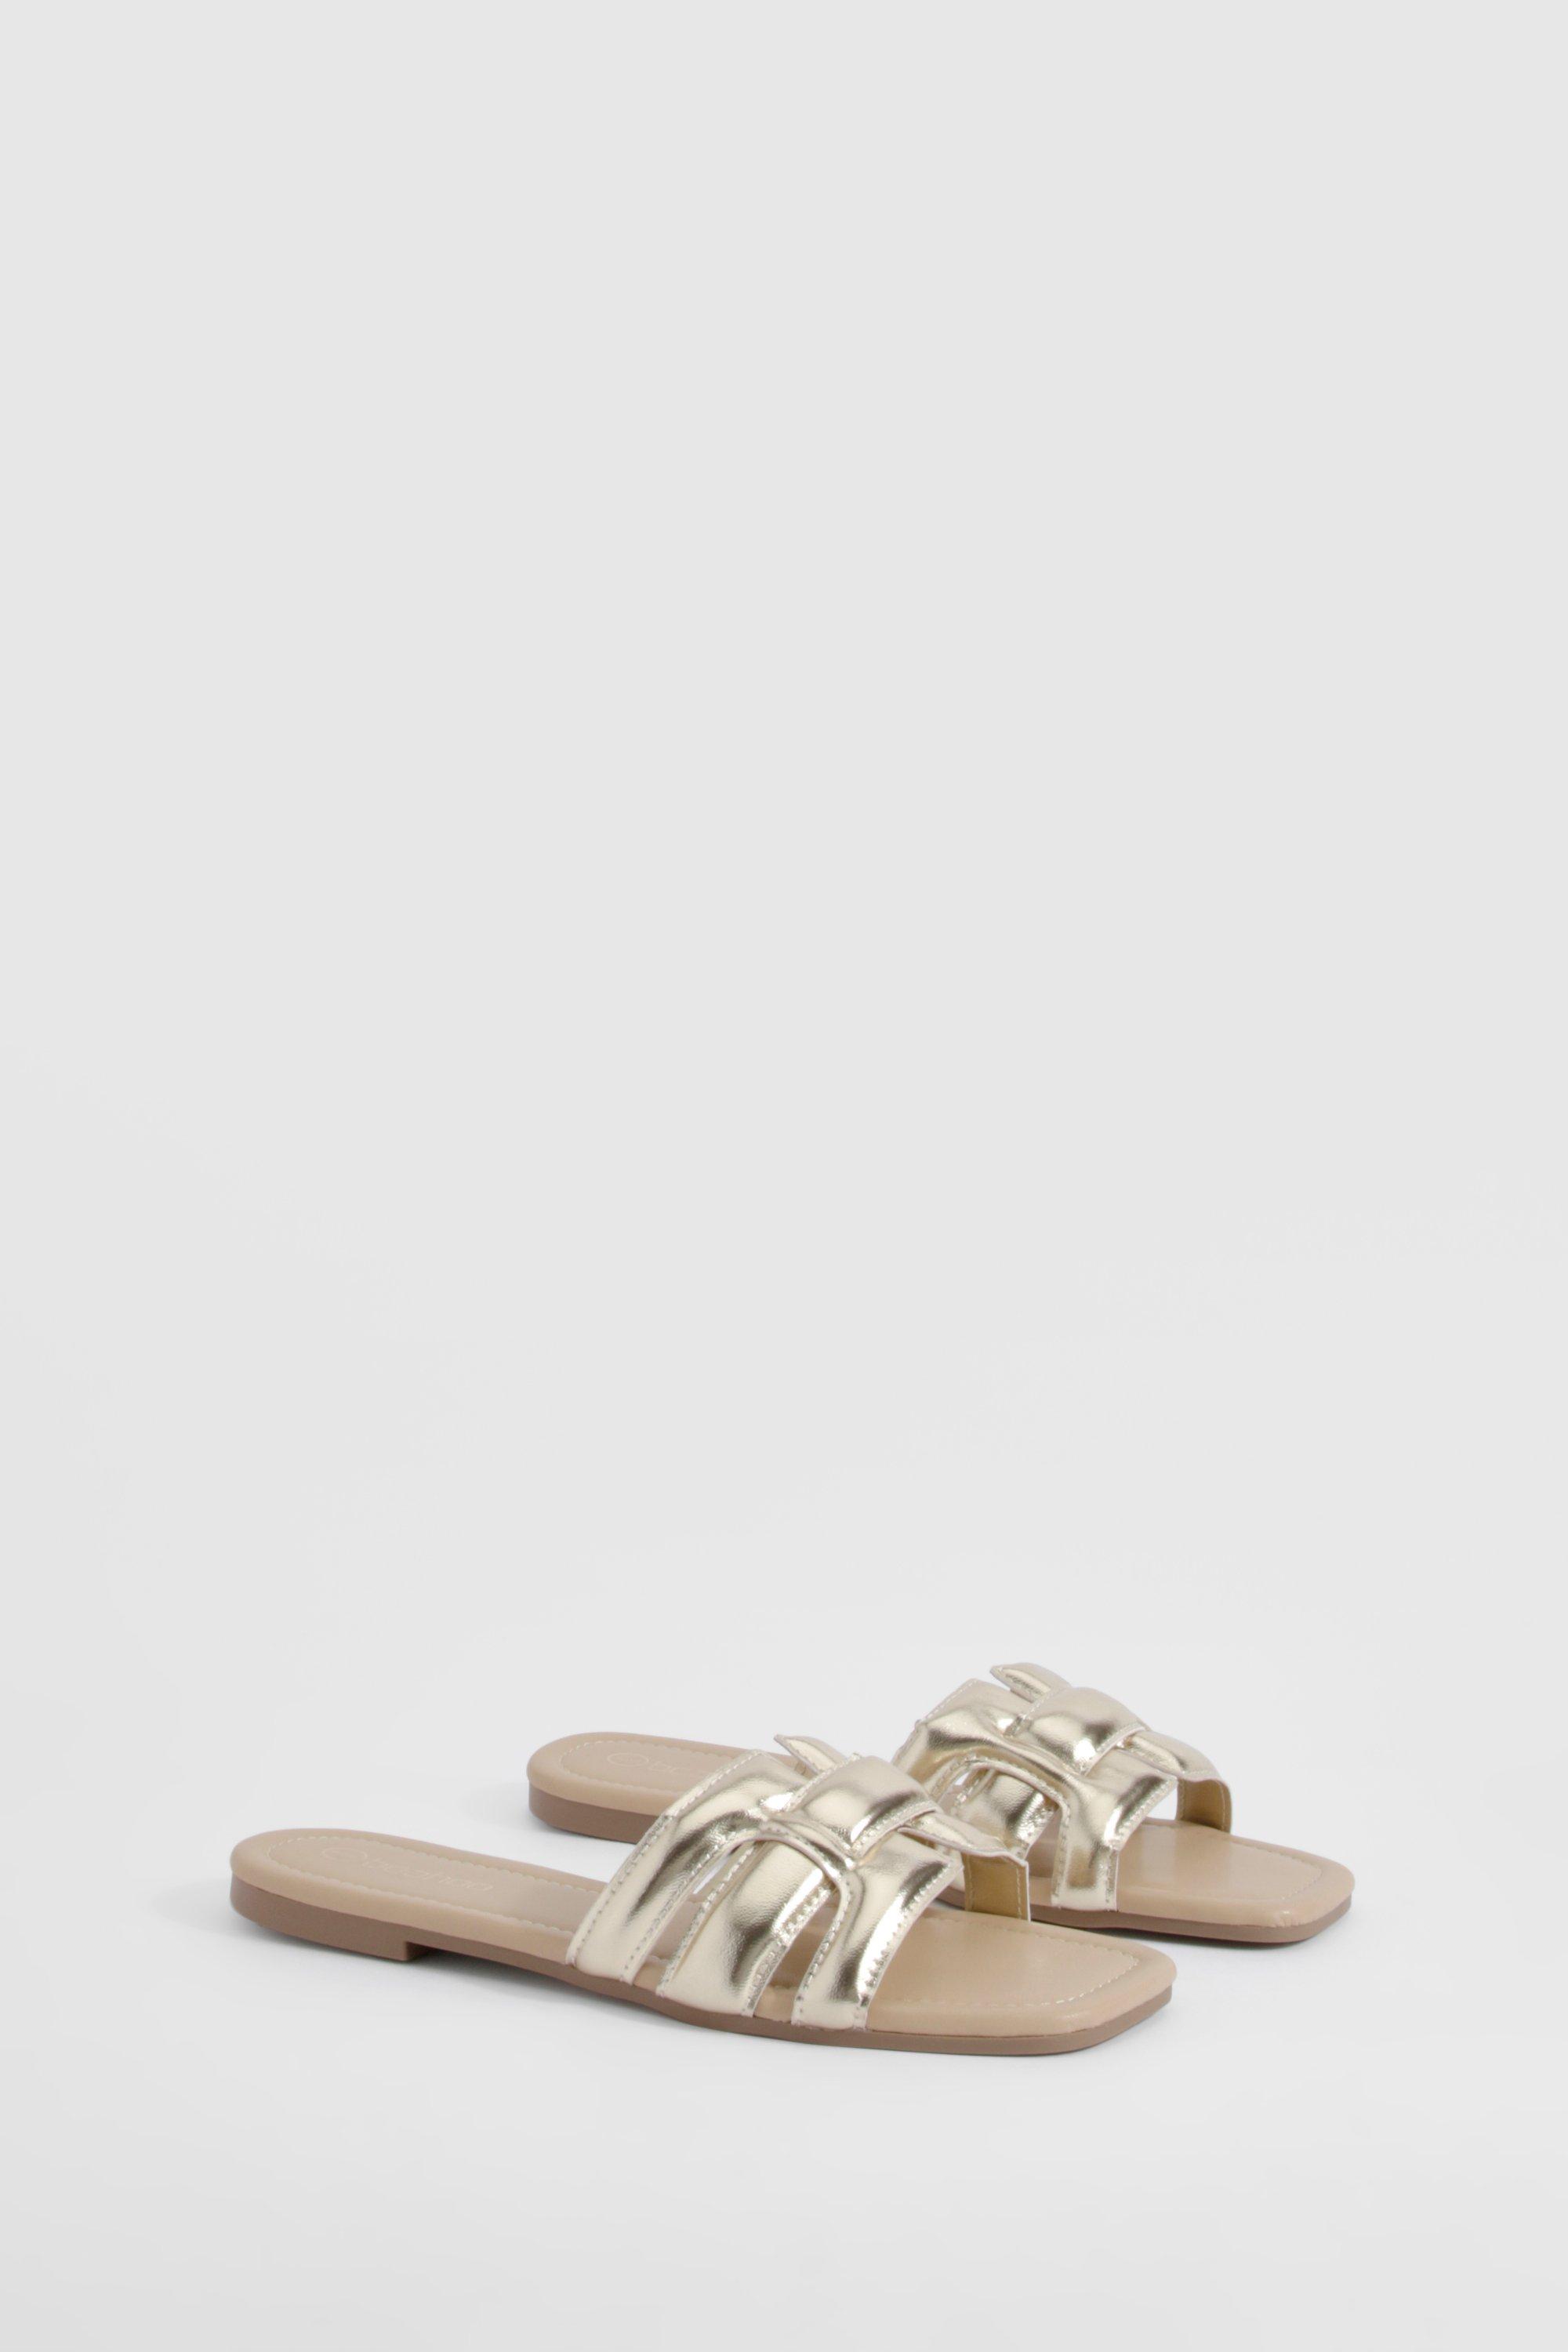 Image of Metallic Contrast Stitch Woven Mule Sandals, Metallics